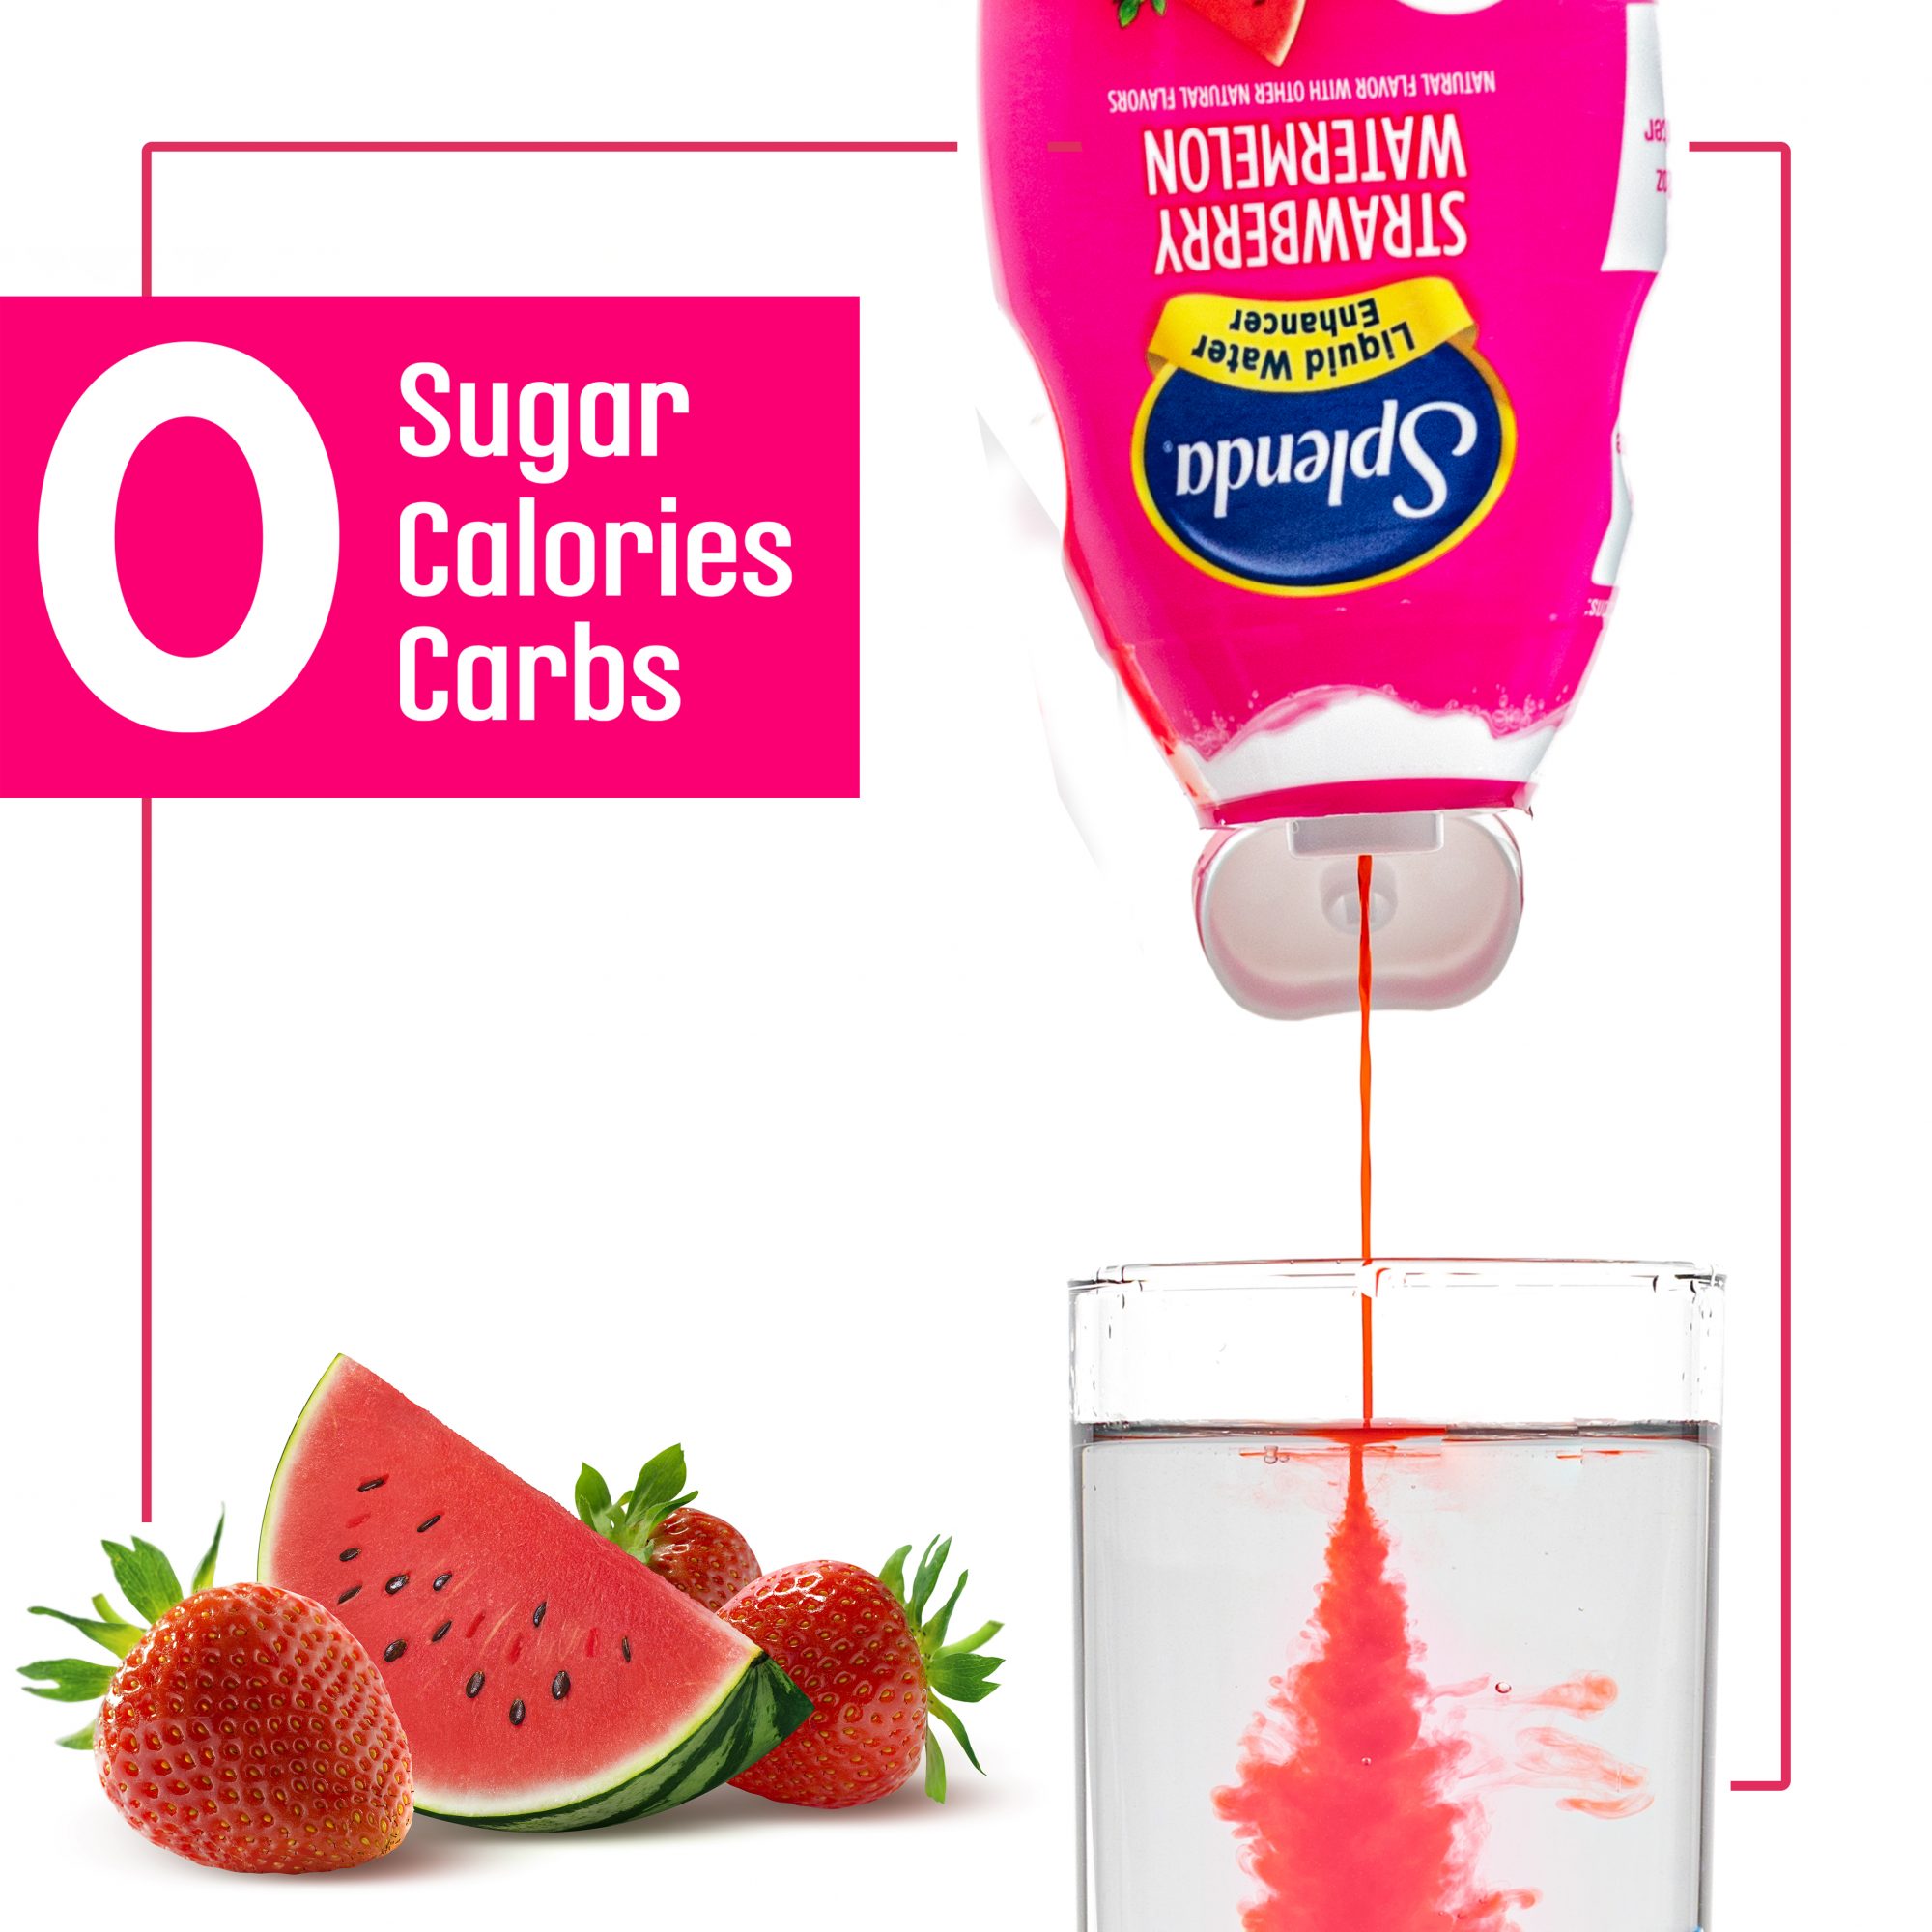 Splenda® Strawberry Watermelon Liquid Water Enhancer